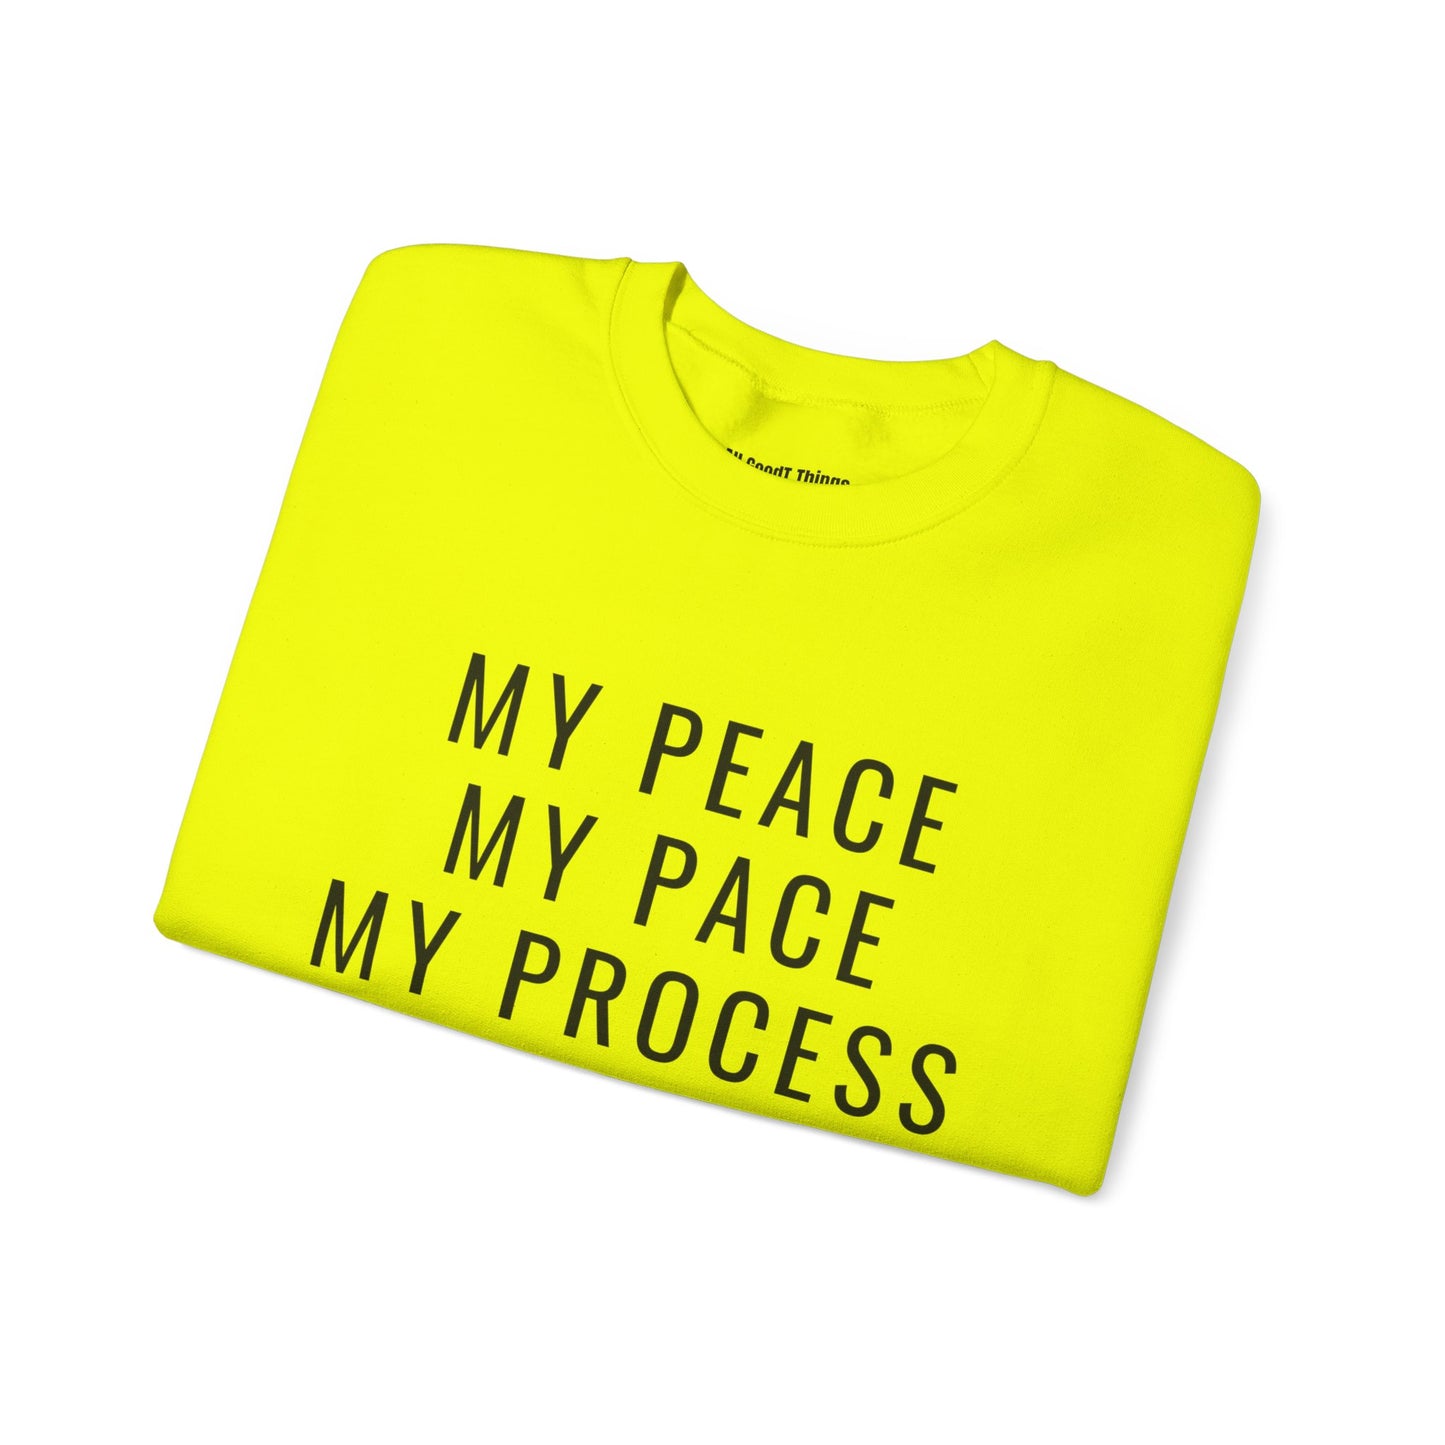 Viola's Drip: My Peace| My Pace| My Process